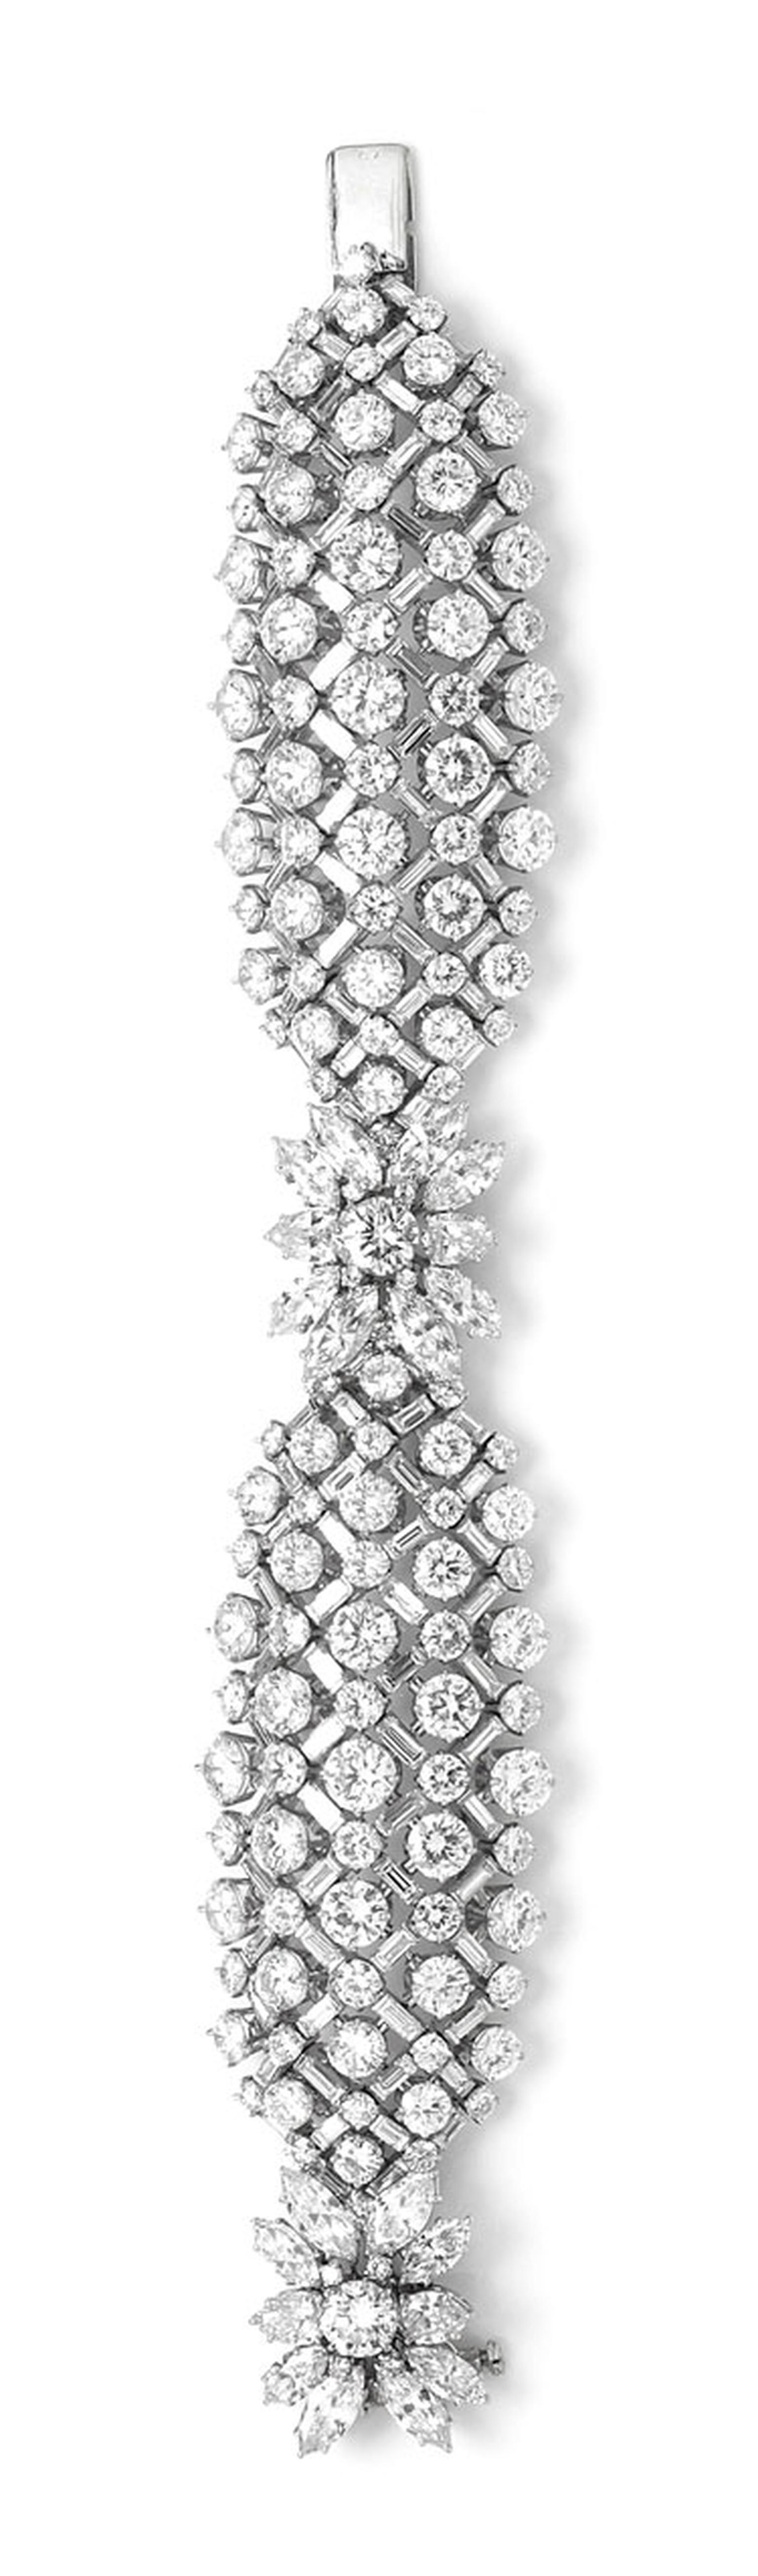 Harry-Winston-vintage-1959-diamond-lattice-bracelet-58ct